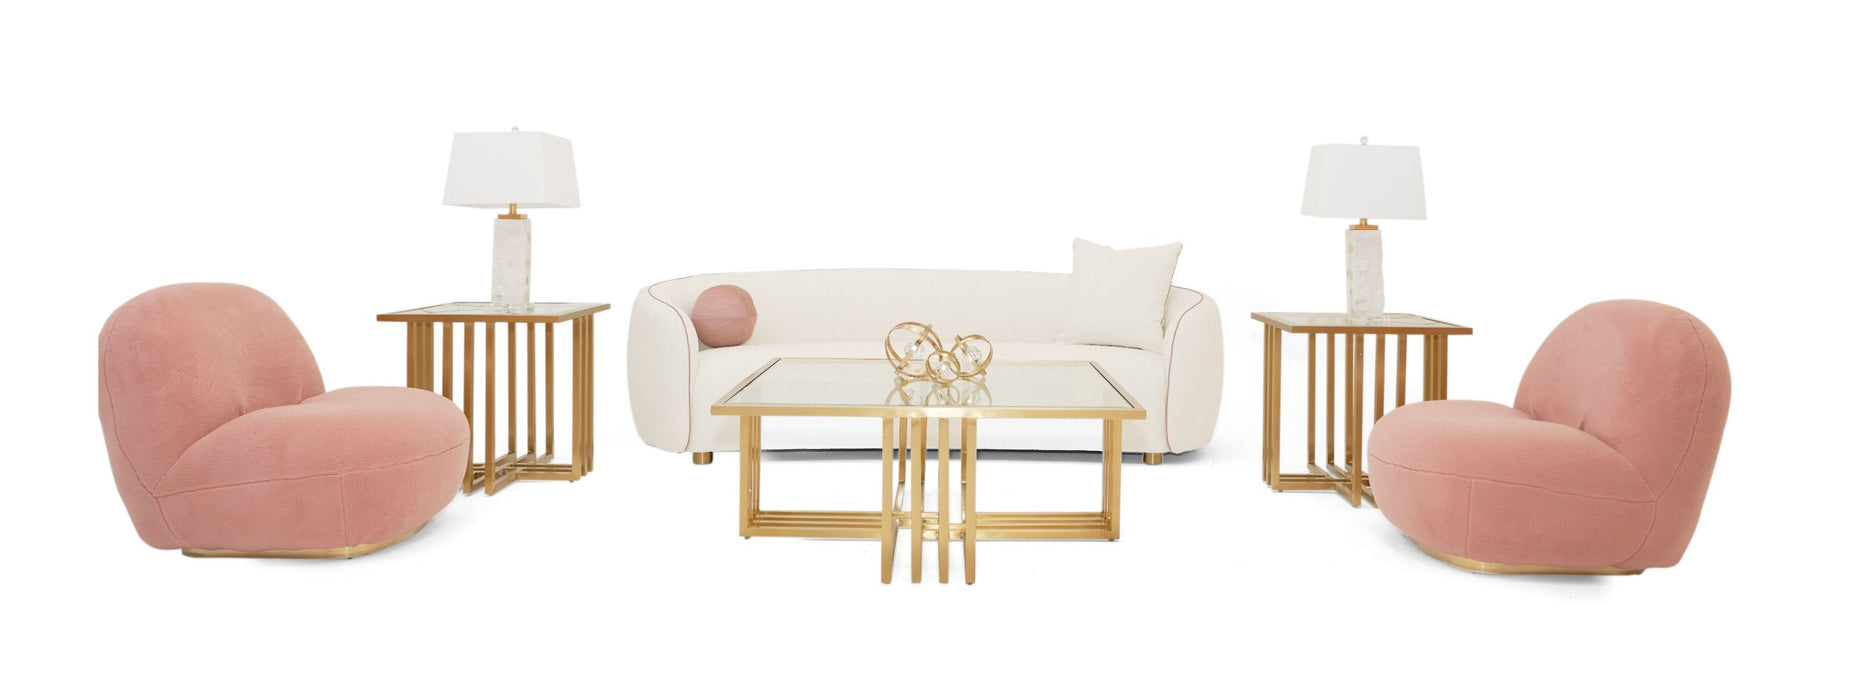 VIG Furniture - Modrest Winfree Modern Off White Fabric 3-Seater Sofa - VGOD-ZW-22013-S